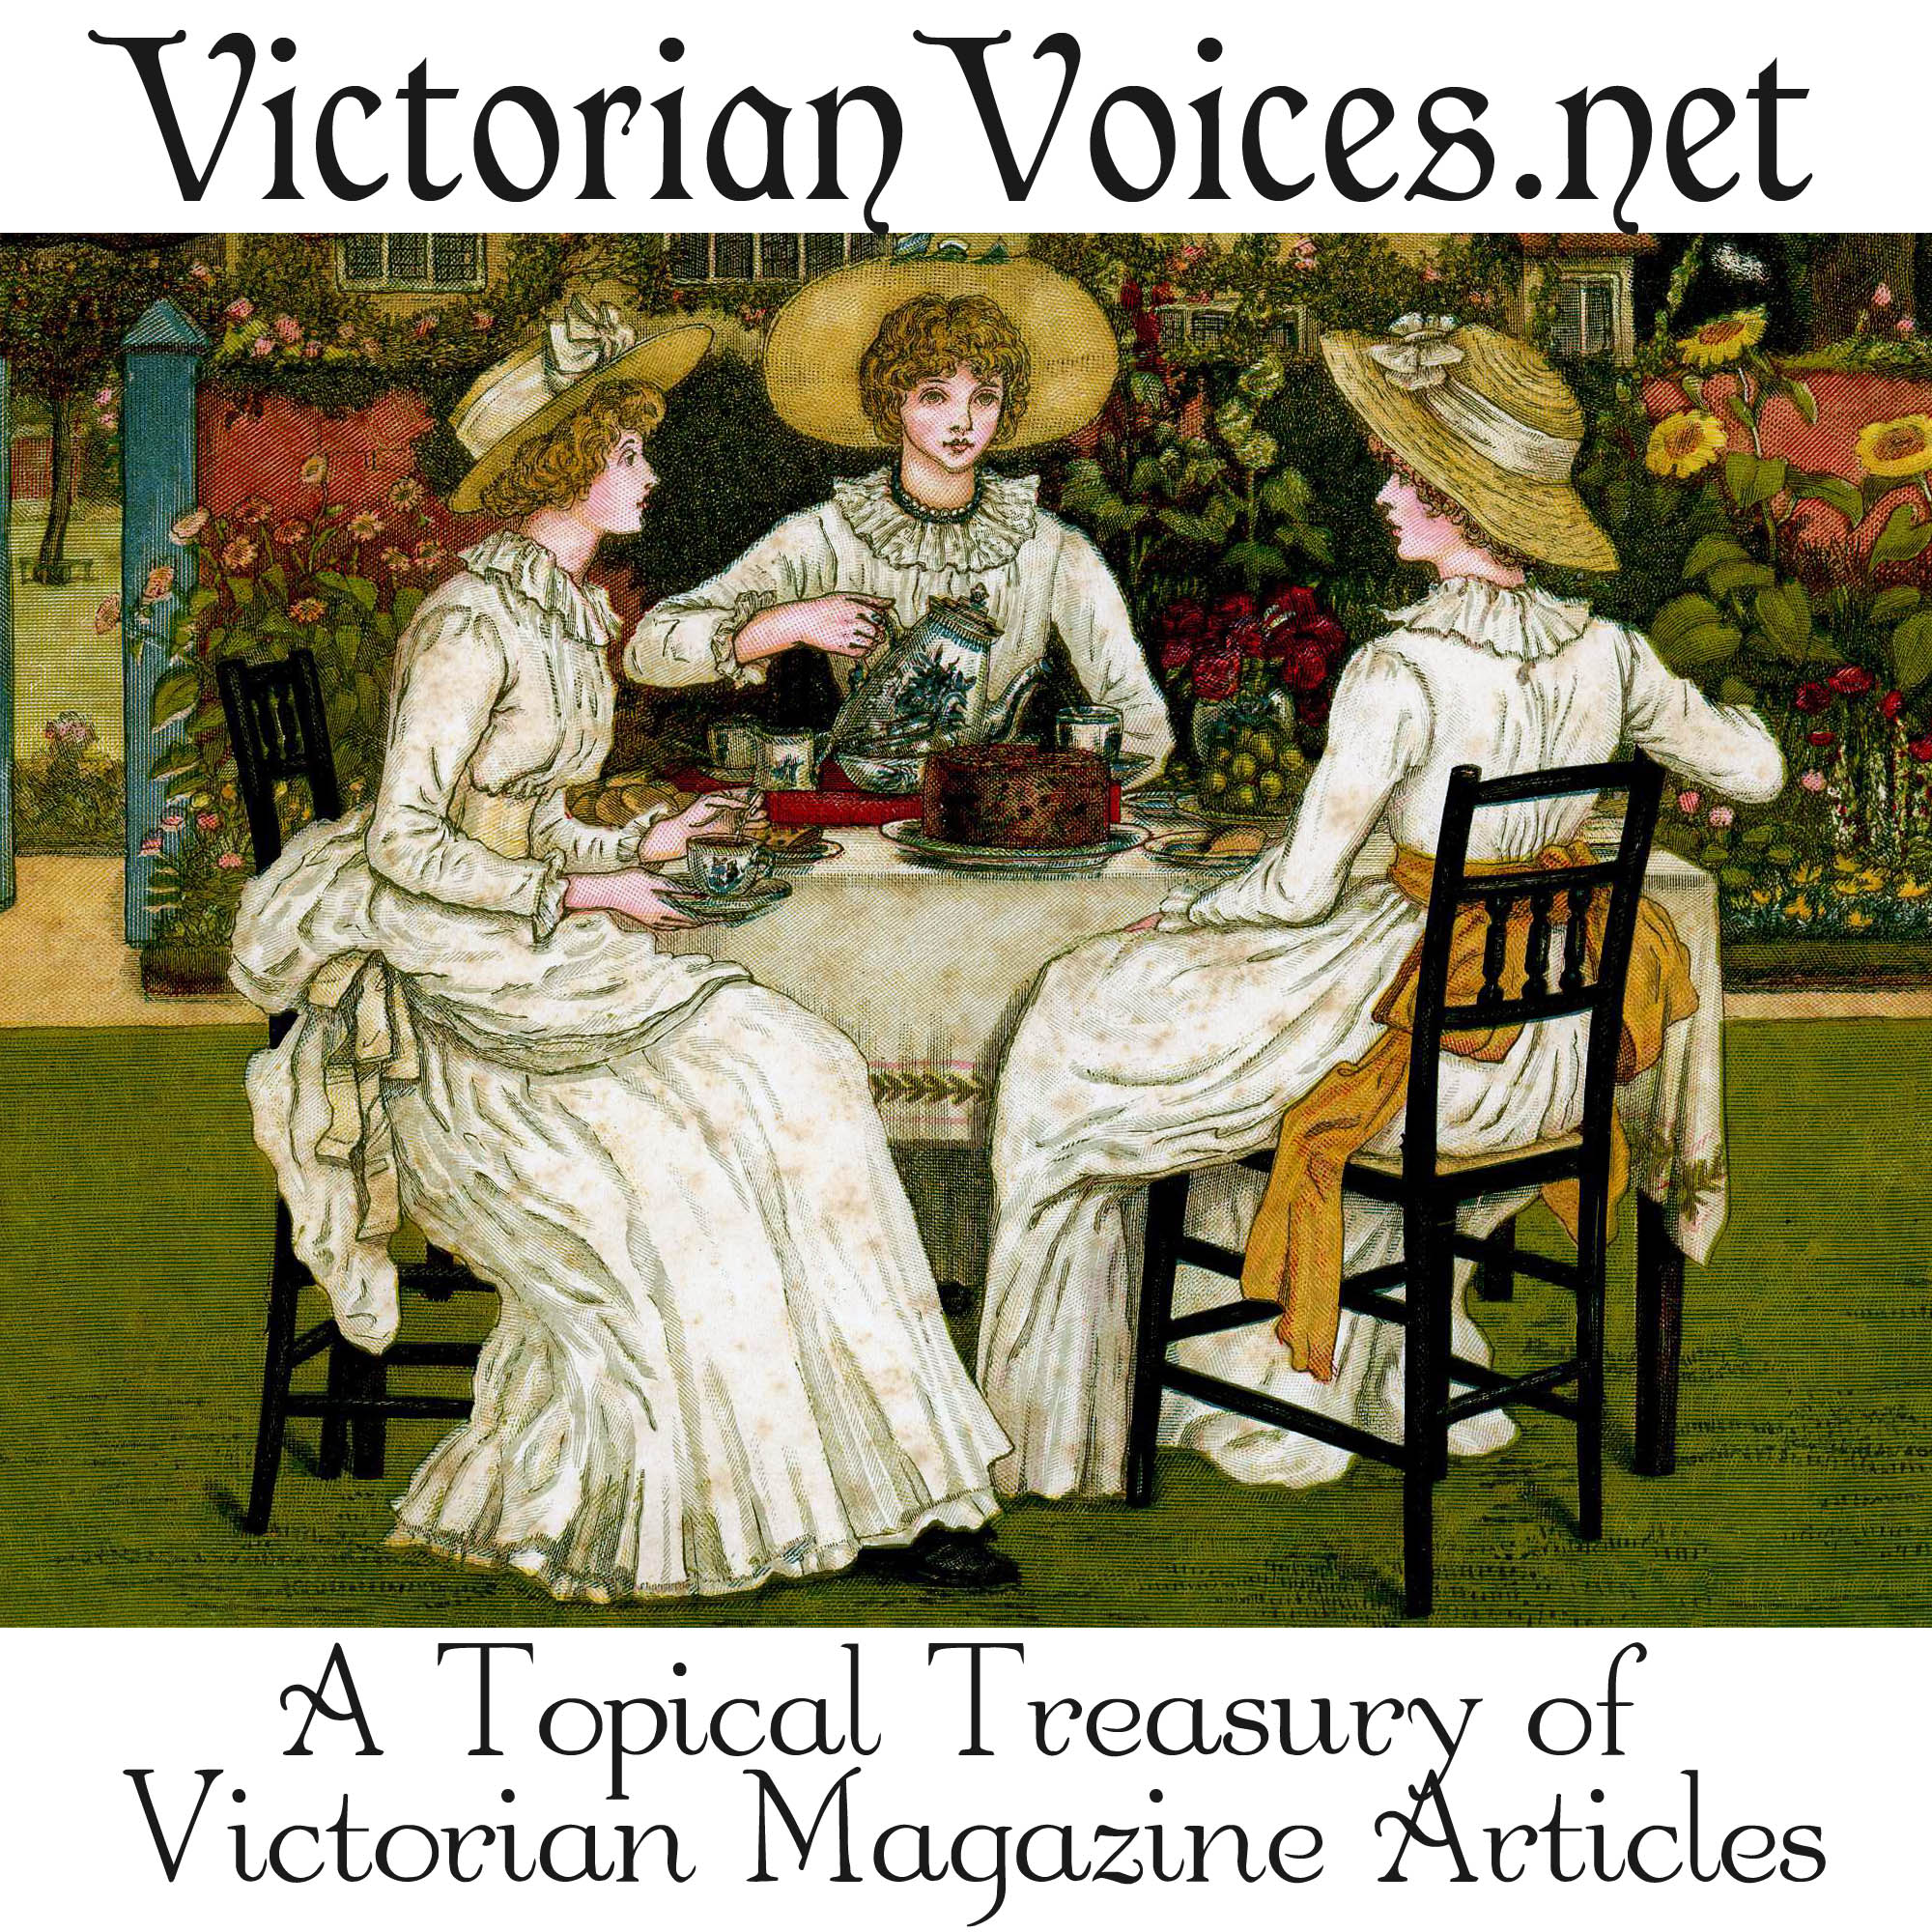 www.victorianvoices.net